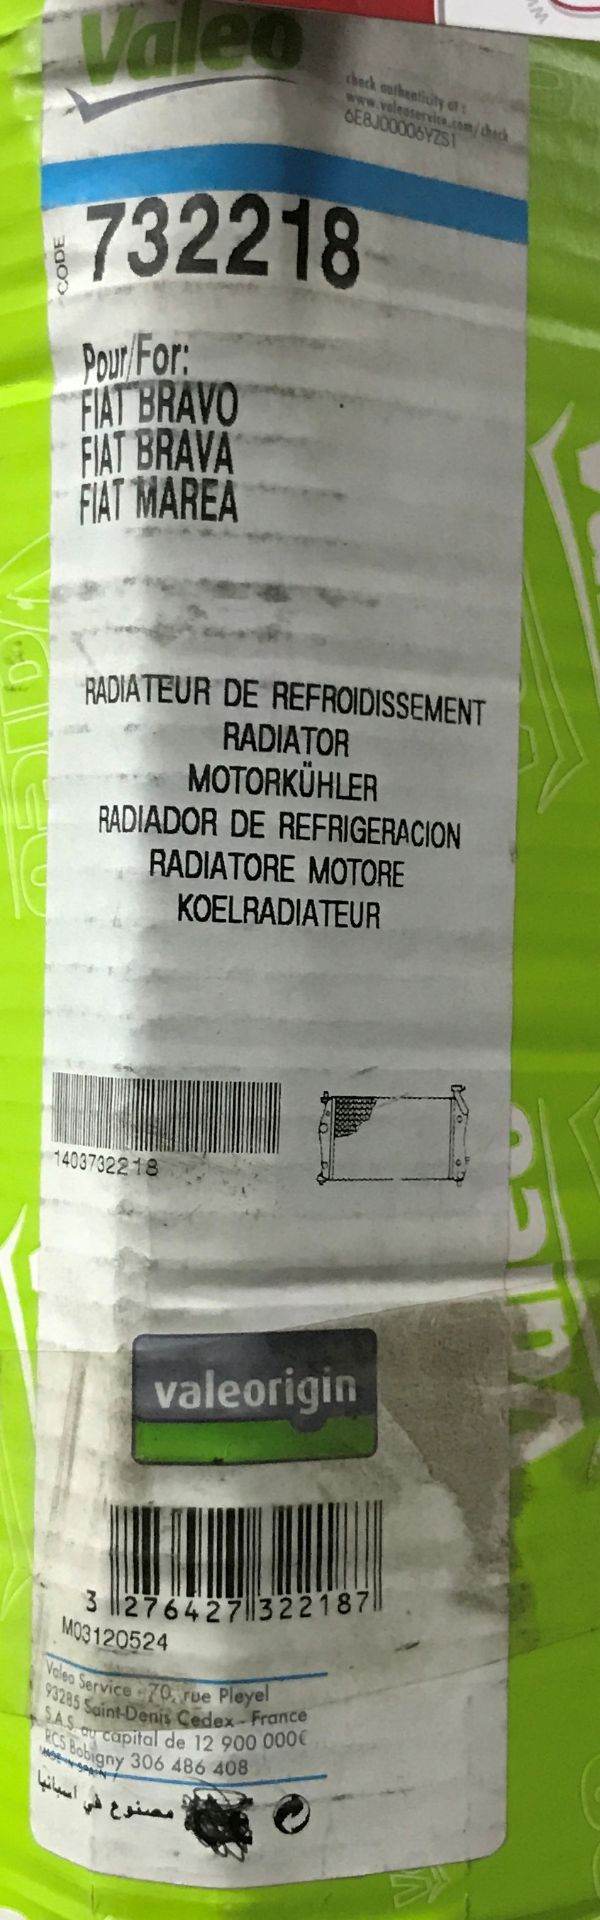 Valeo Car Radiator Item Code: 732218